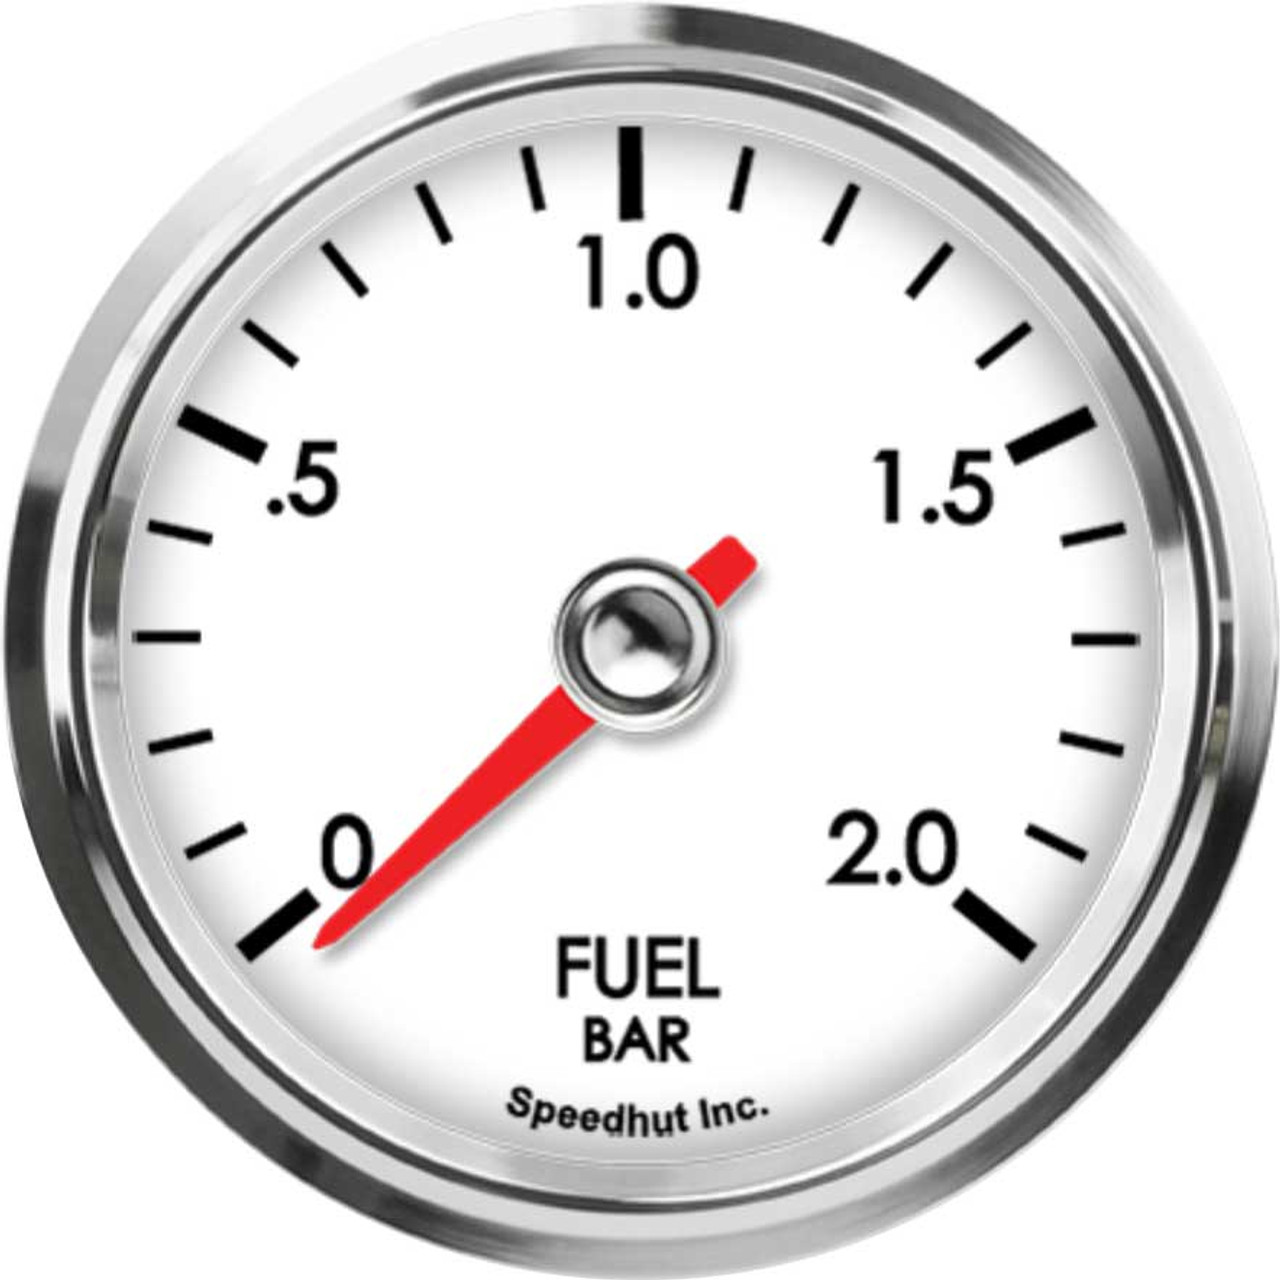 2-5/8" Classic Fuel Pressure Gauge 0-2.0 bar